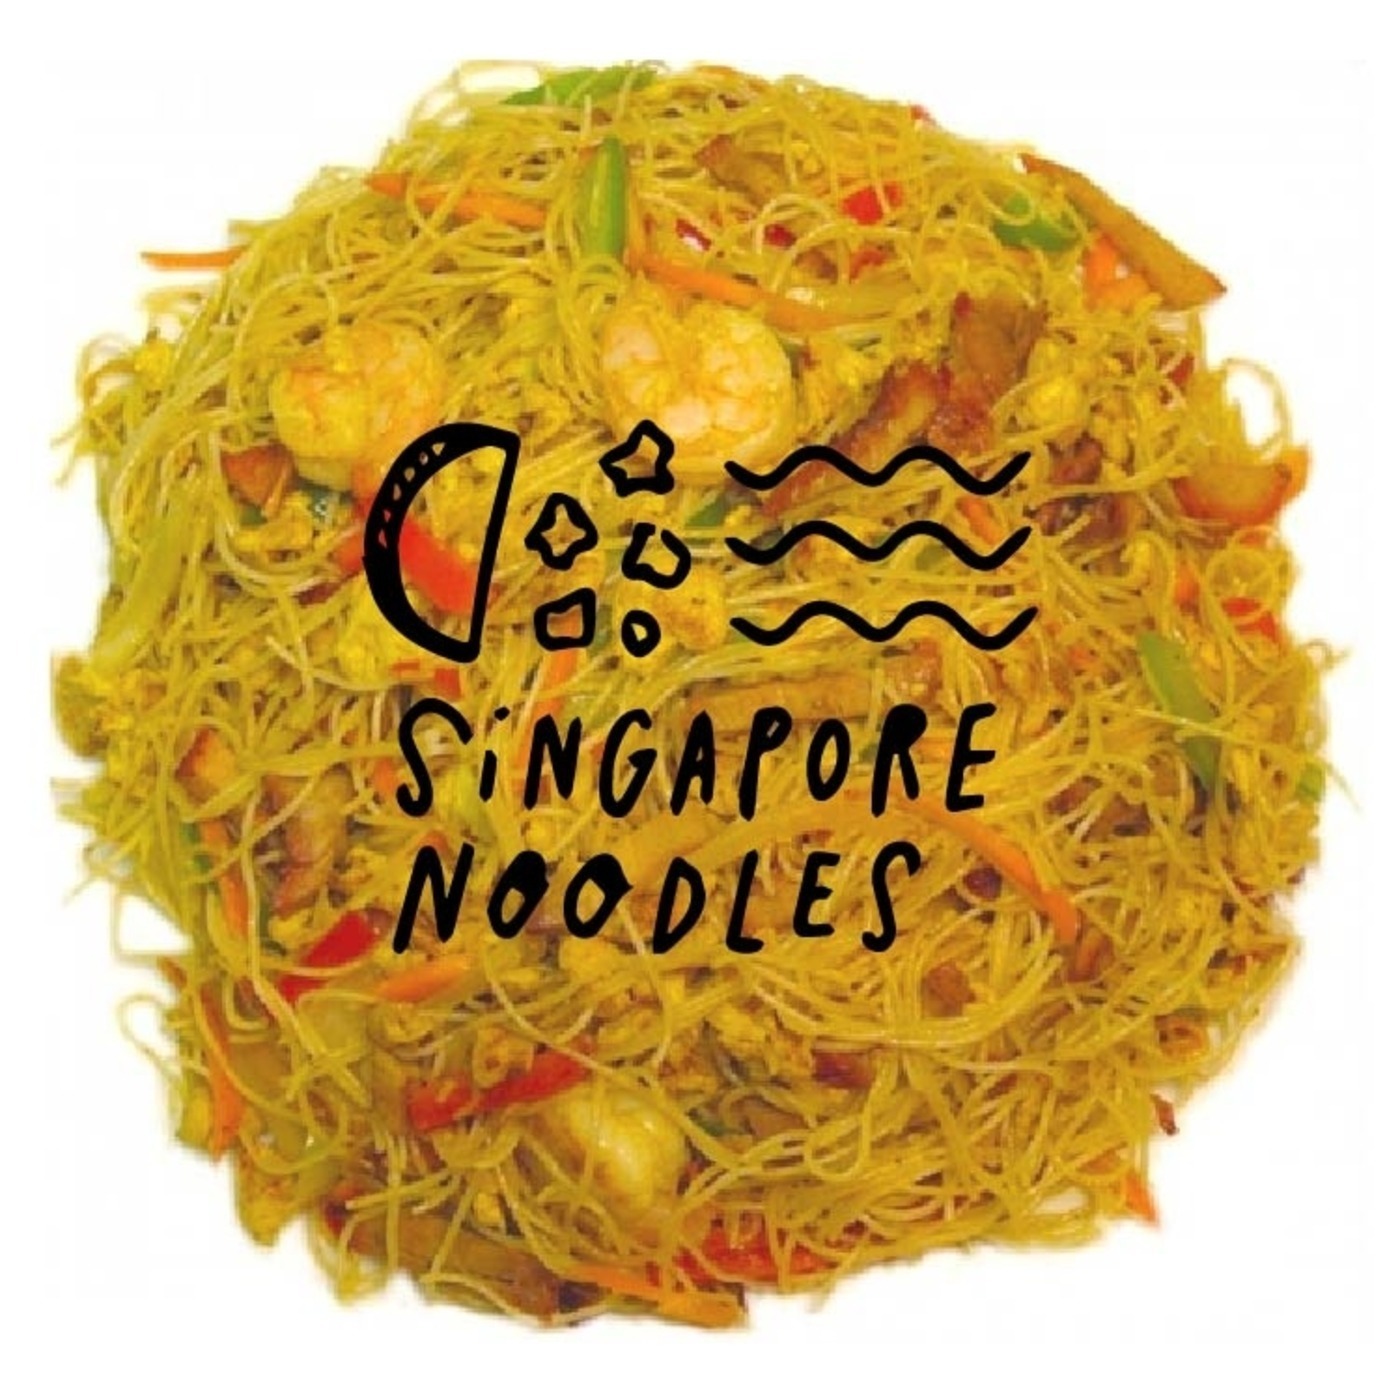 On Raya Kuih - by Pamelia Chia - Singapore Noodles